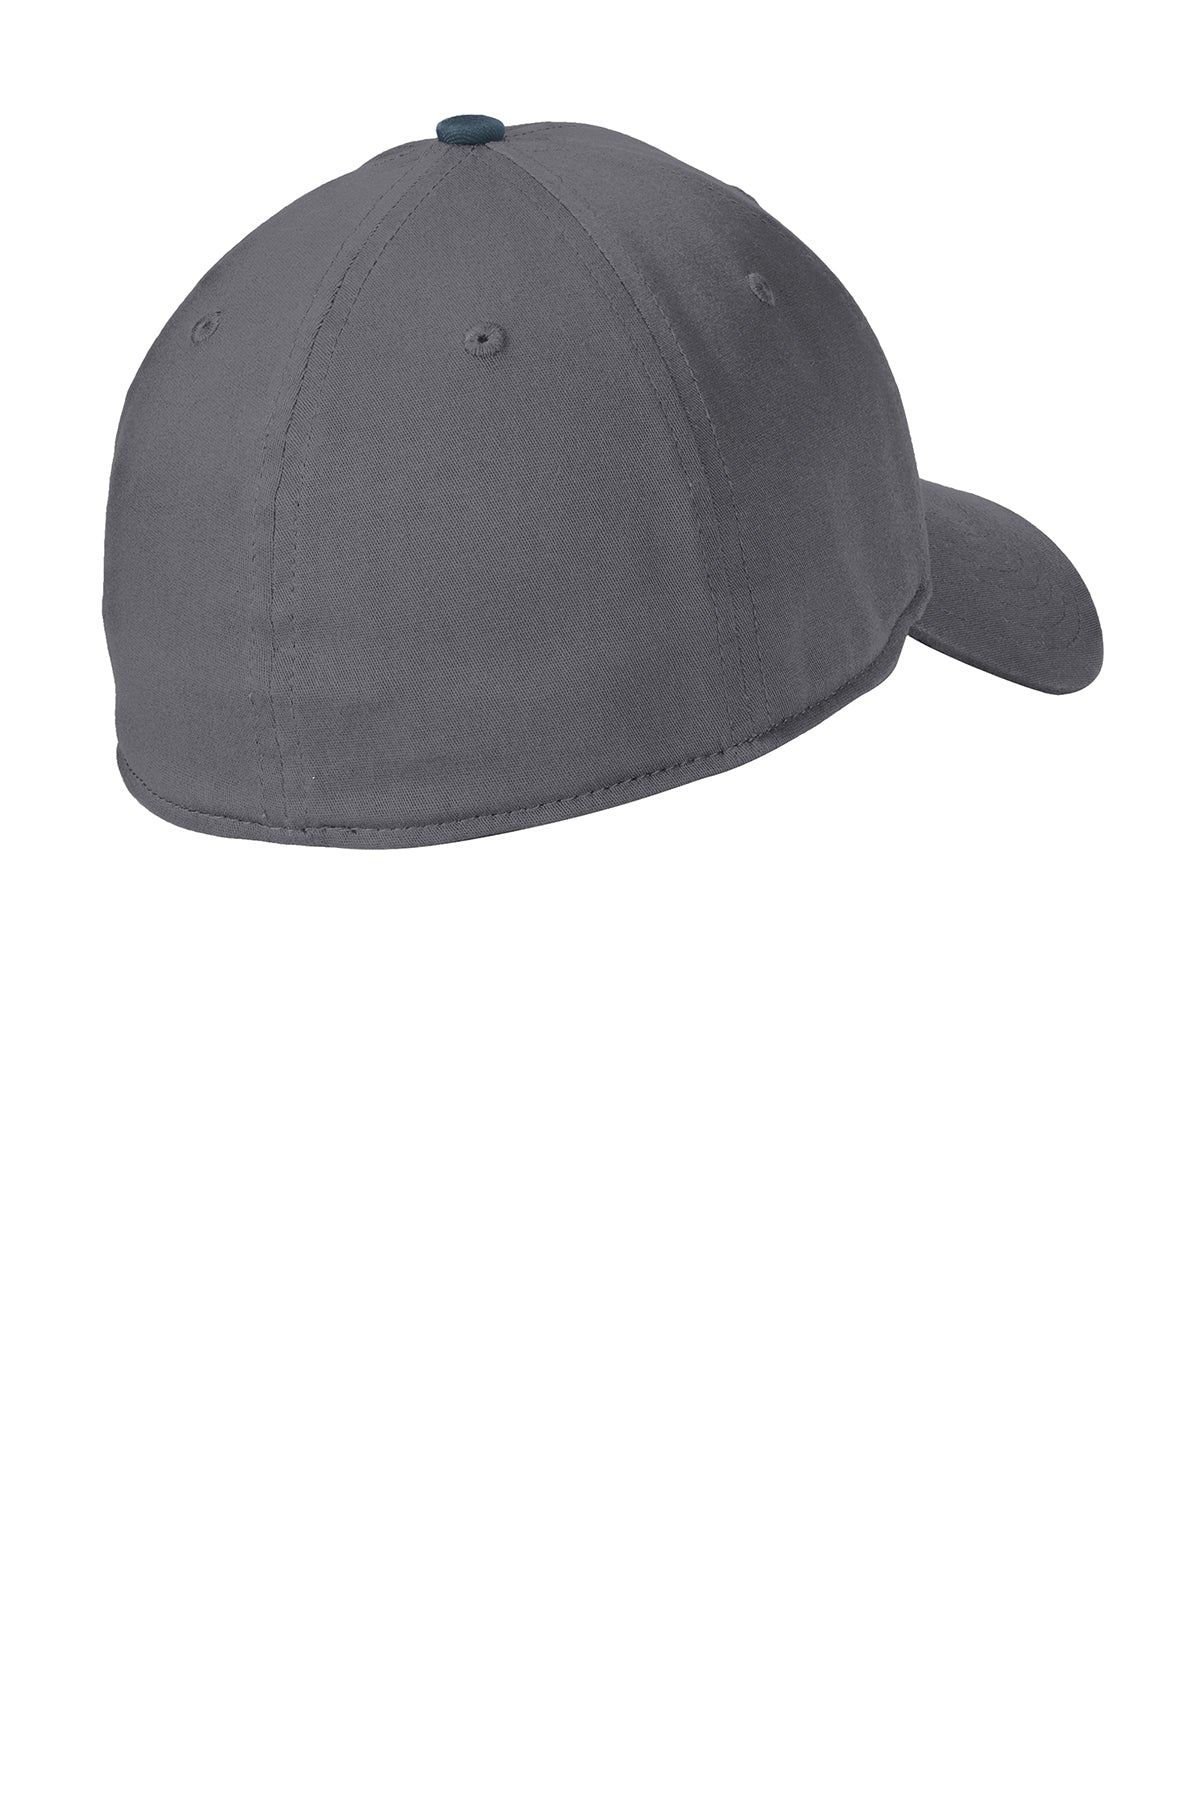 New Era Interception Branded Caps, Graphite/ Deep Navy